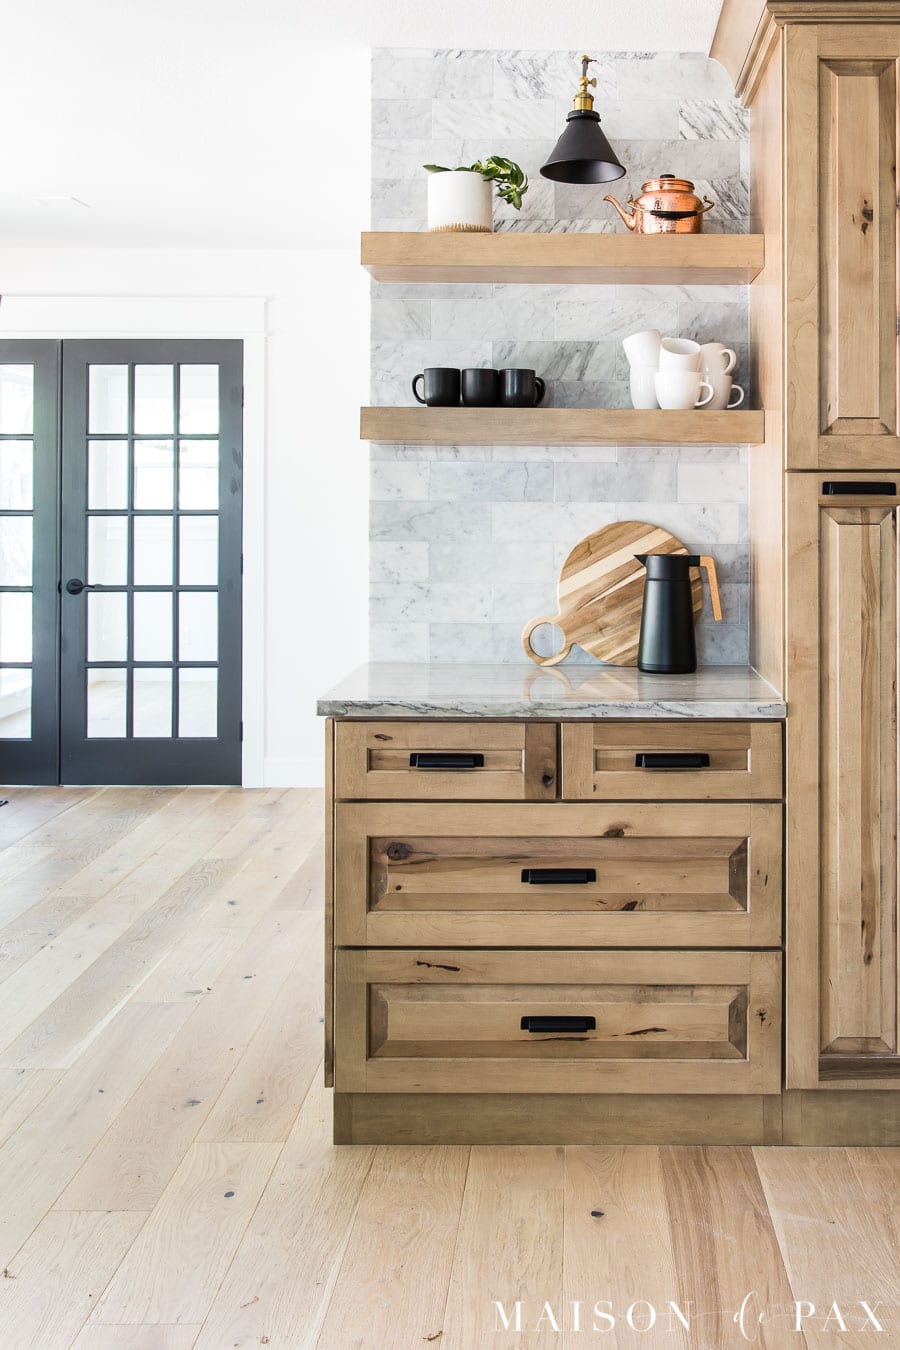 white oak wood floors with natural wood cabinets | Maison de Pax